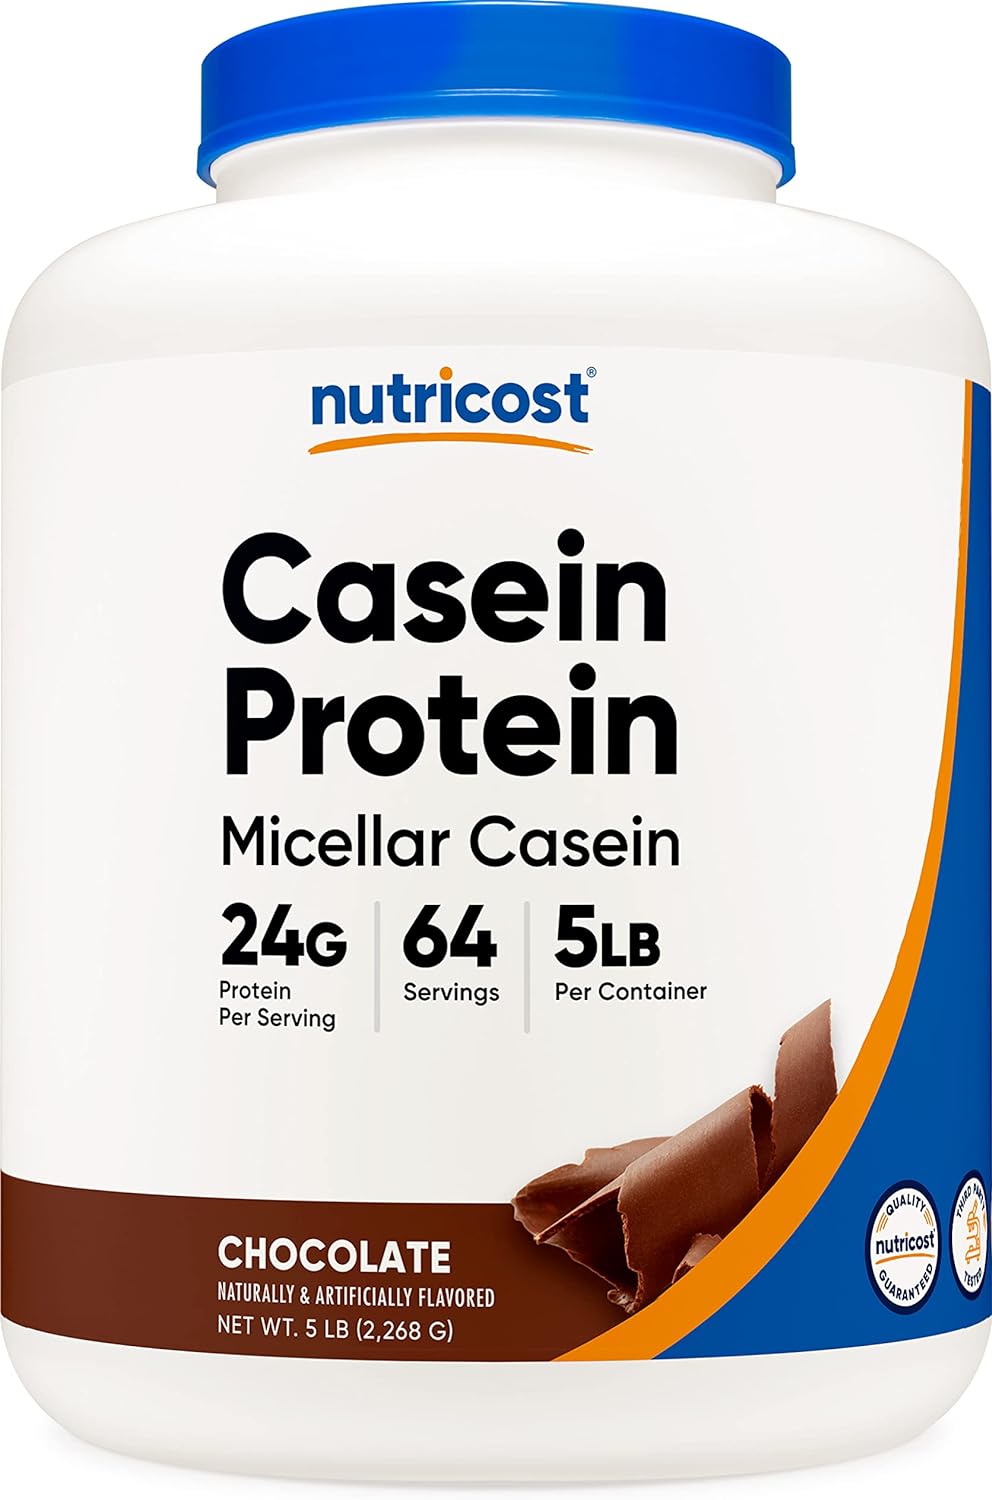 Nutricost Casein Protein Powder 5 Chocolate - Micellar Casein, Gluten Free, Non-GMO